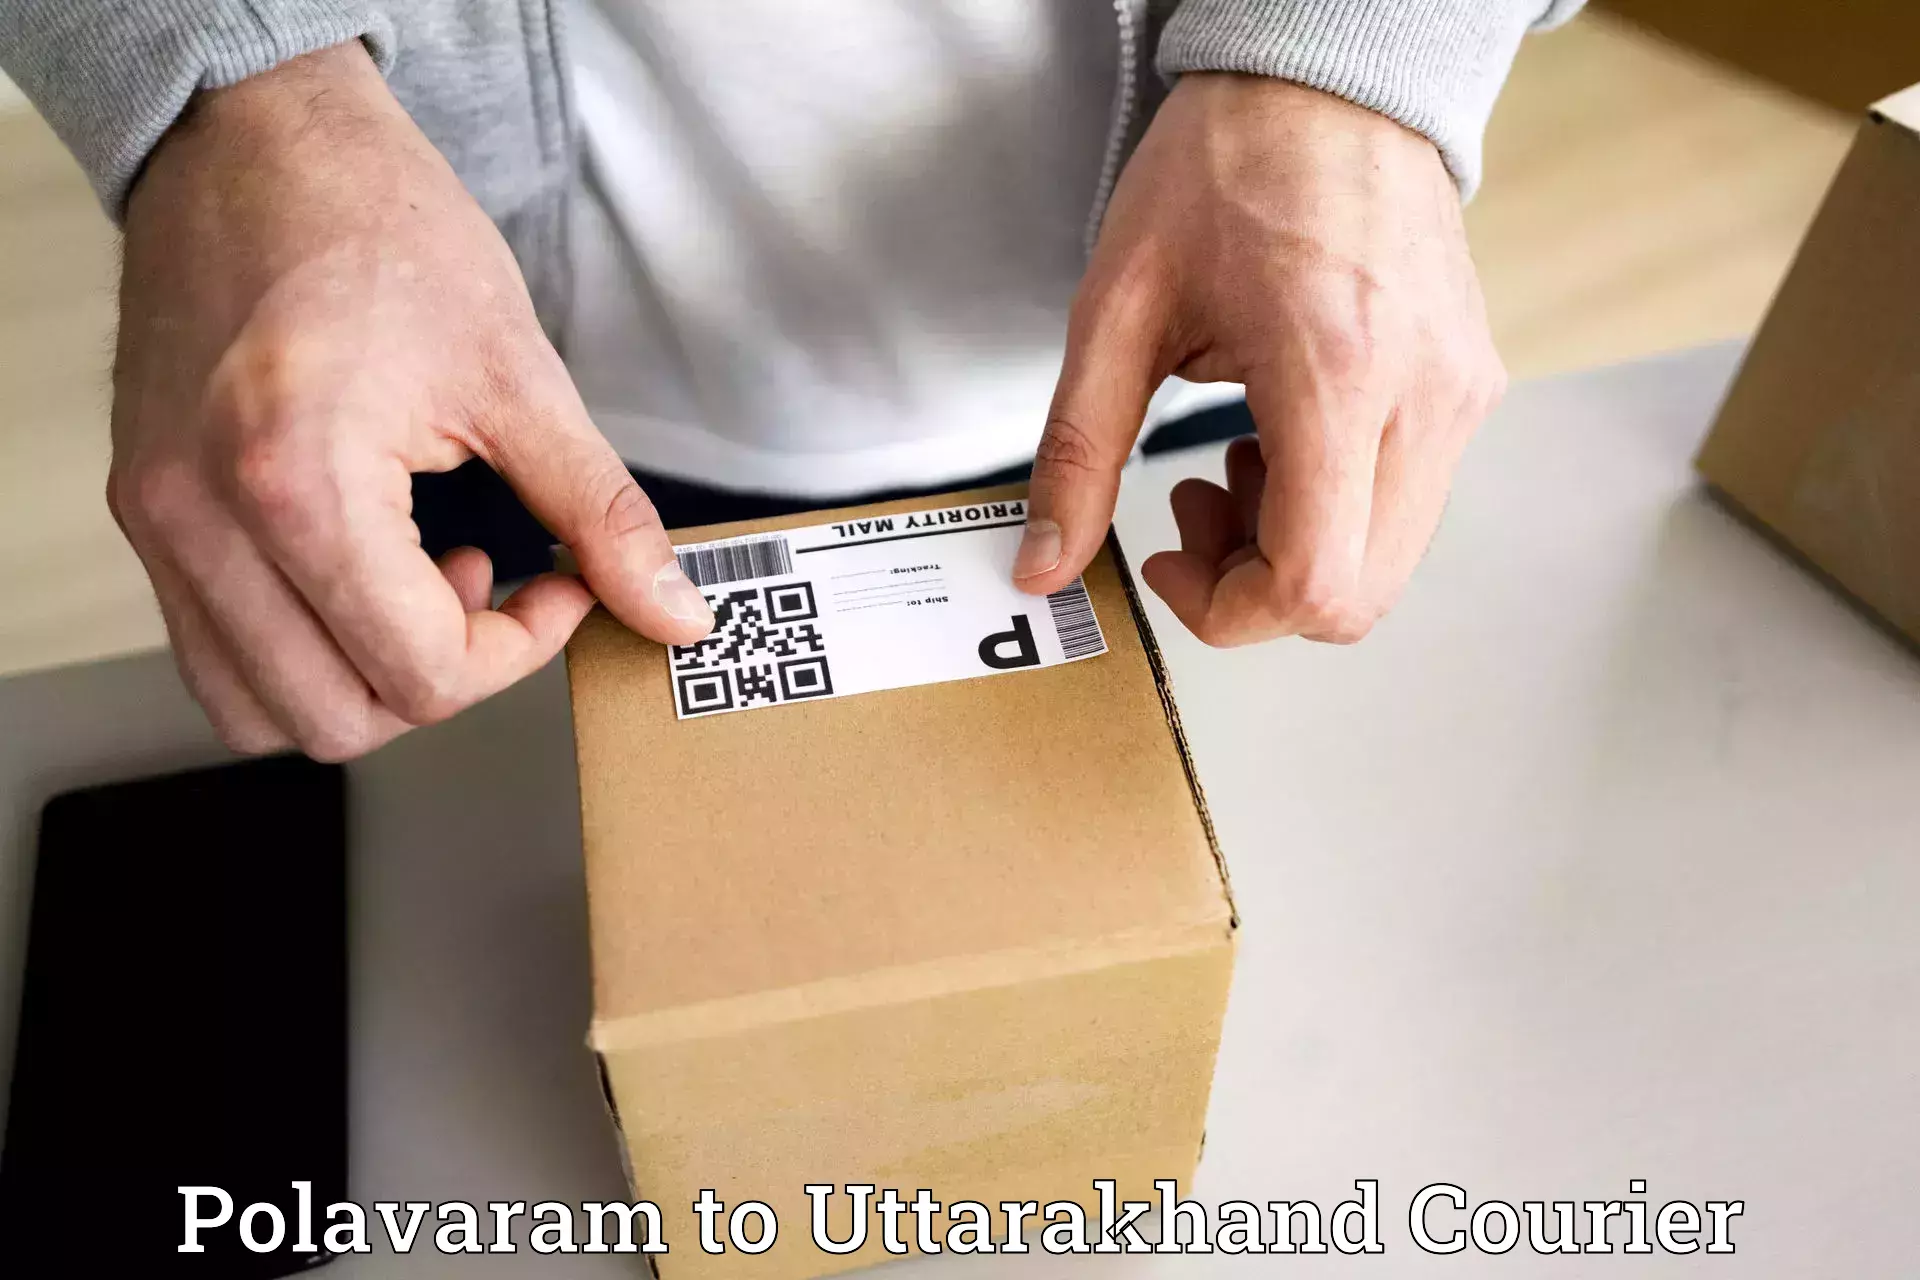 Speedy delivery service Polavaram to Ramnagar